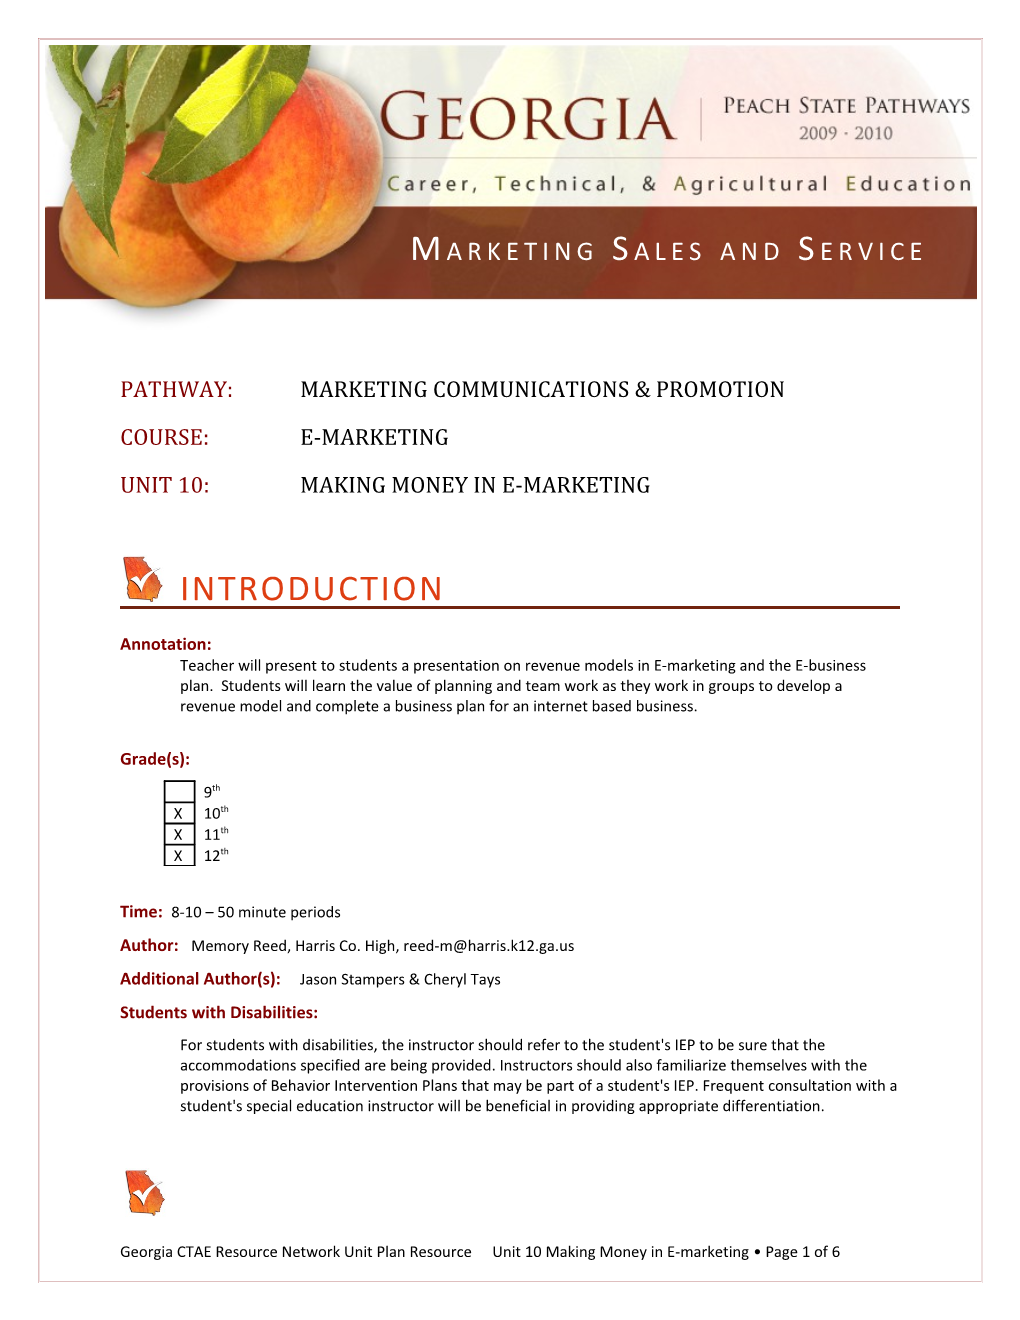 Pathway: Marketing Communications & Promotion